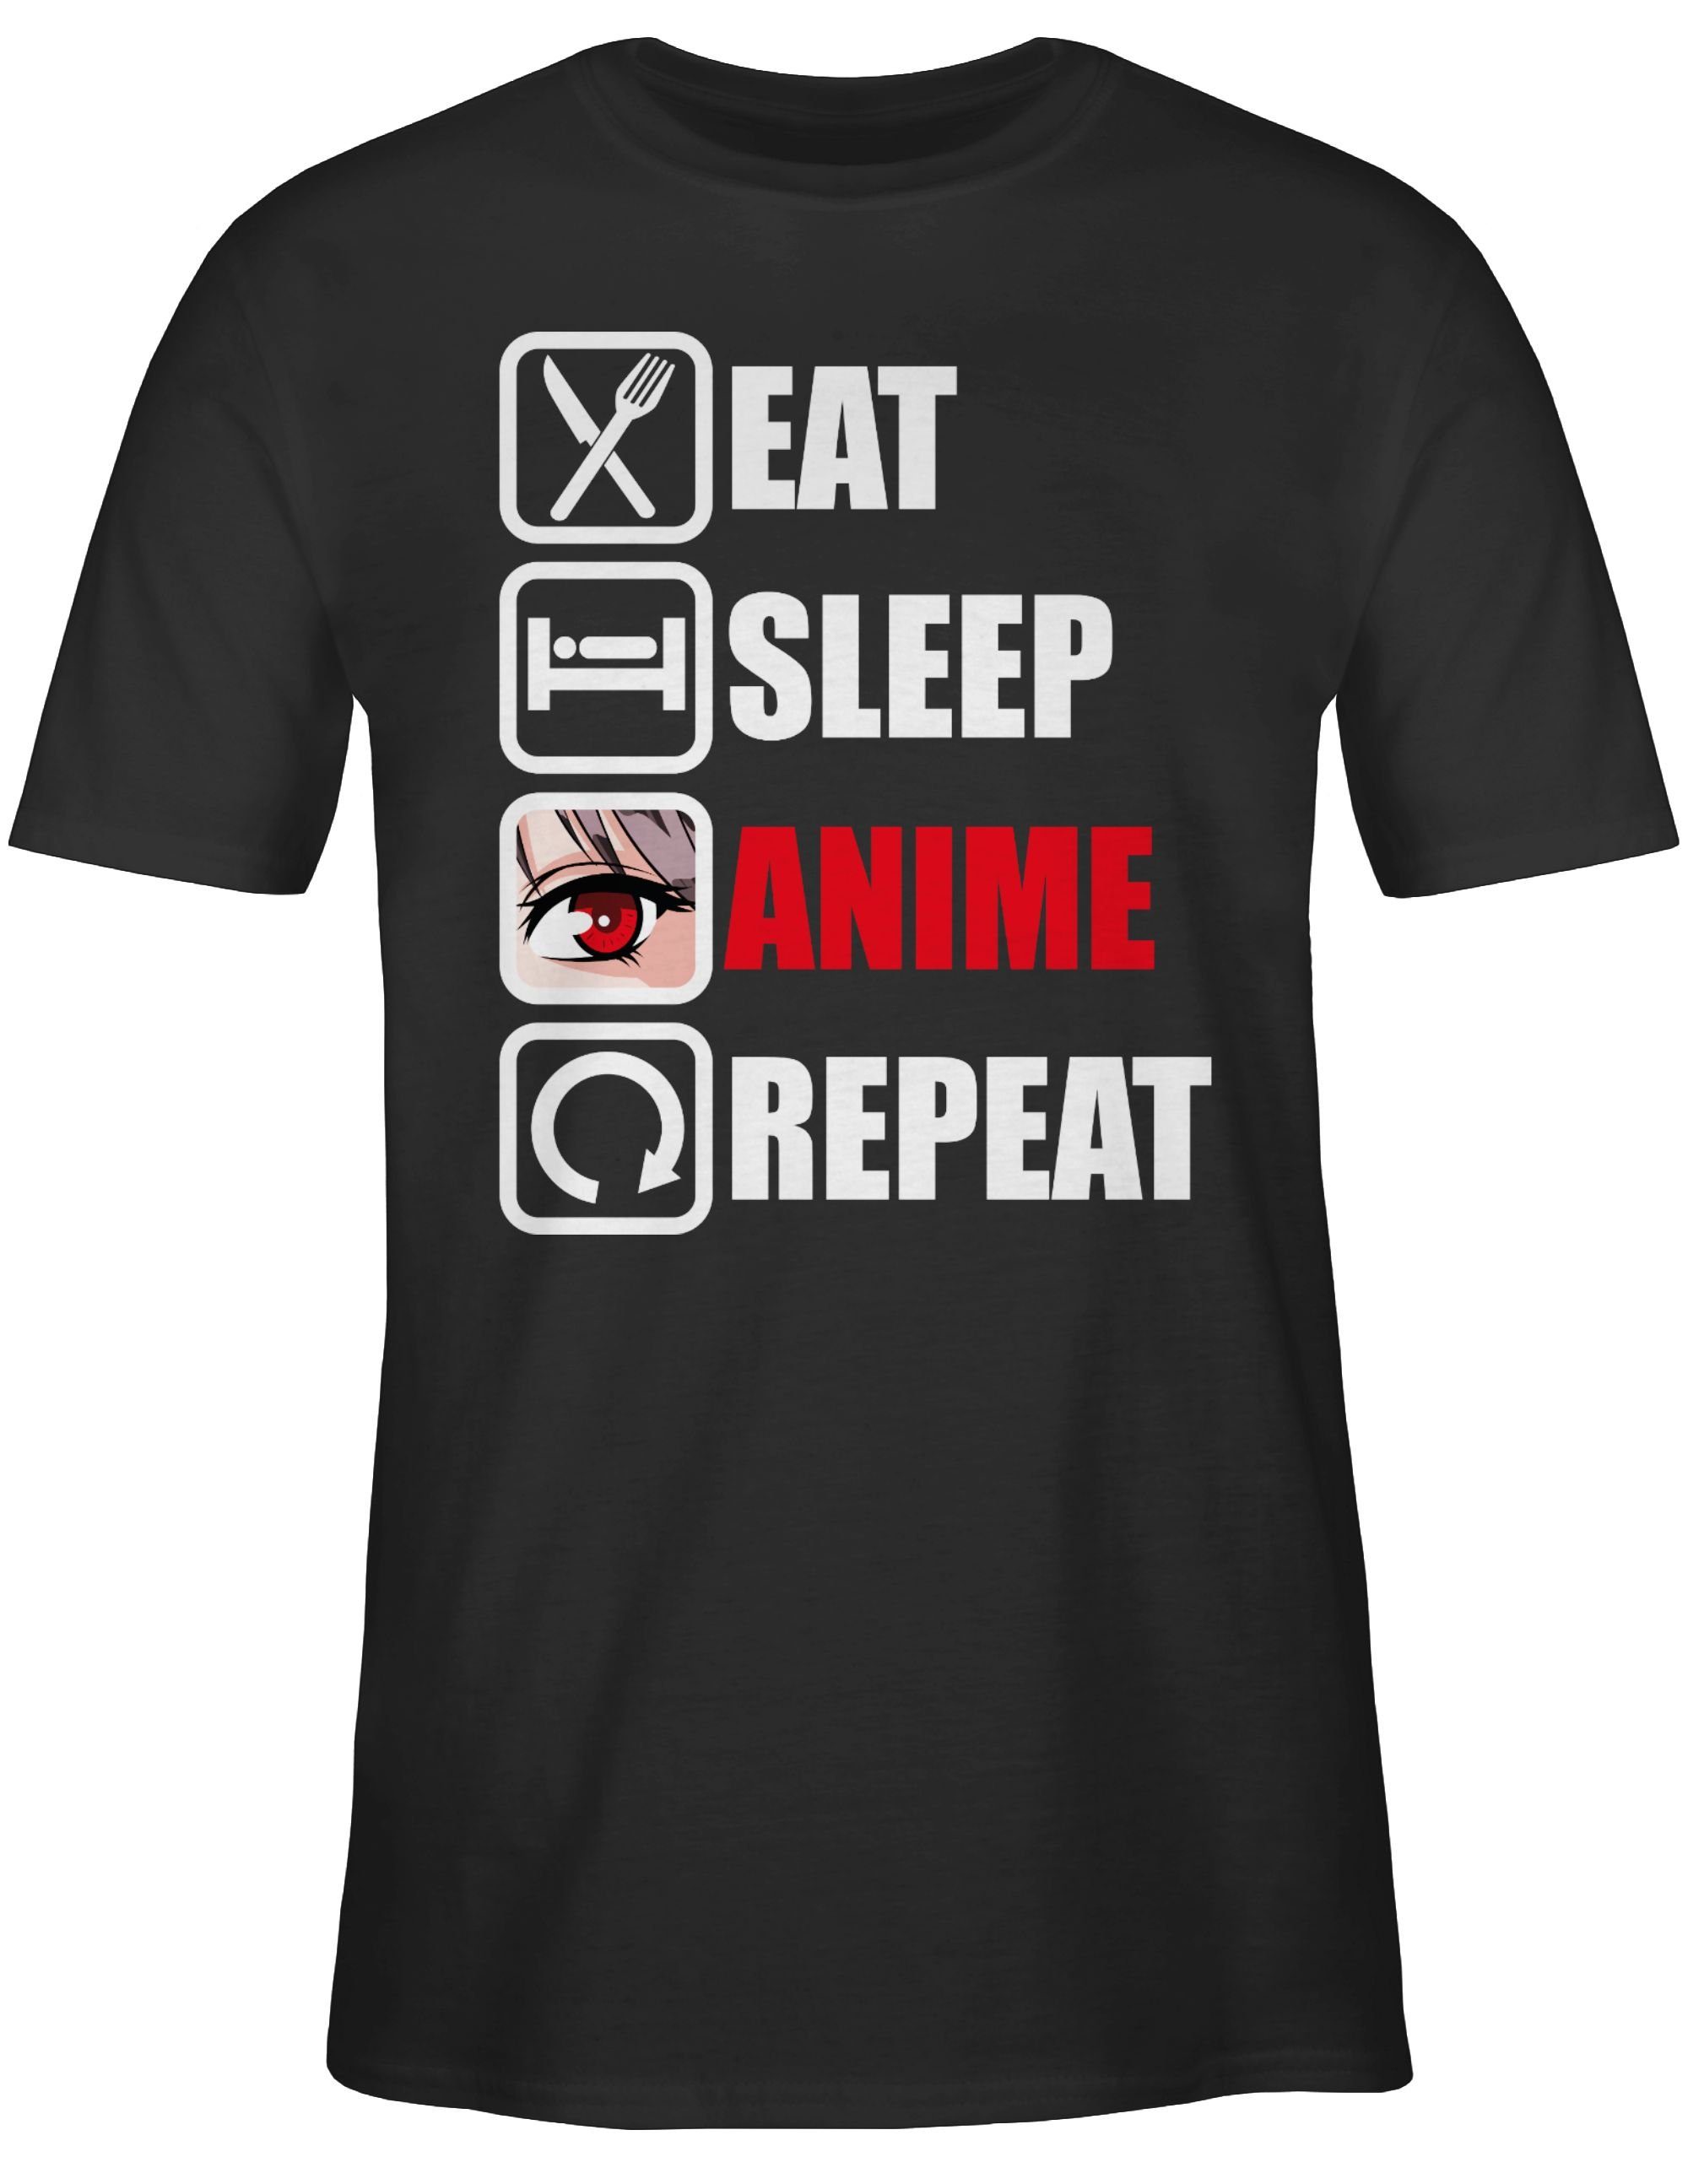 Japan Schwarz Manga Geschenke 1 Eat repeat Anime sleep Anime Shirtracer T-Shirt -